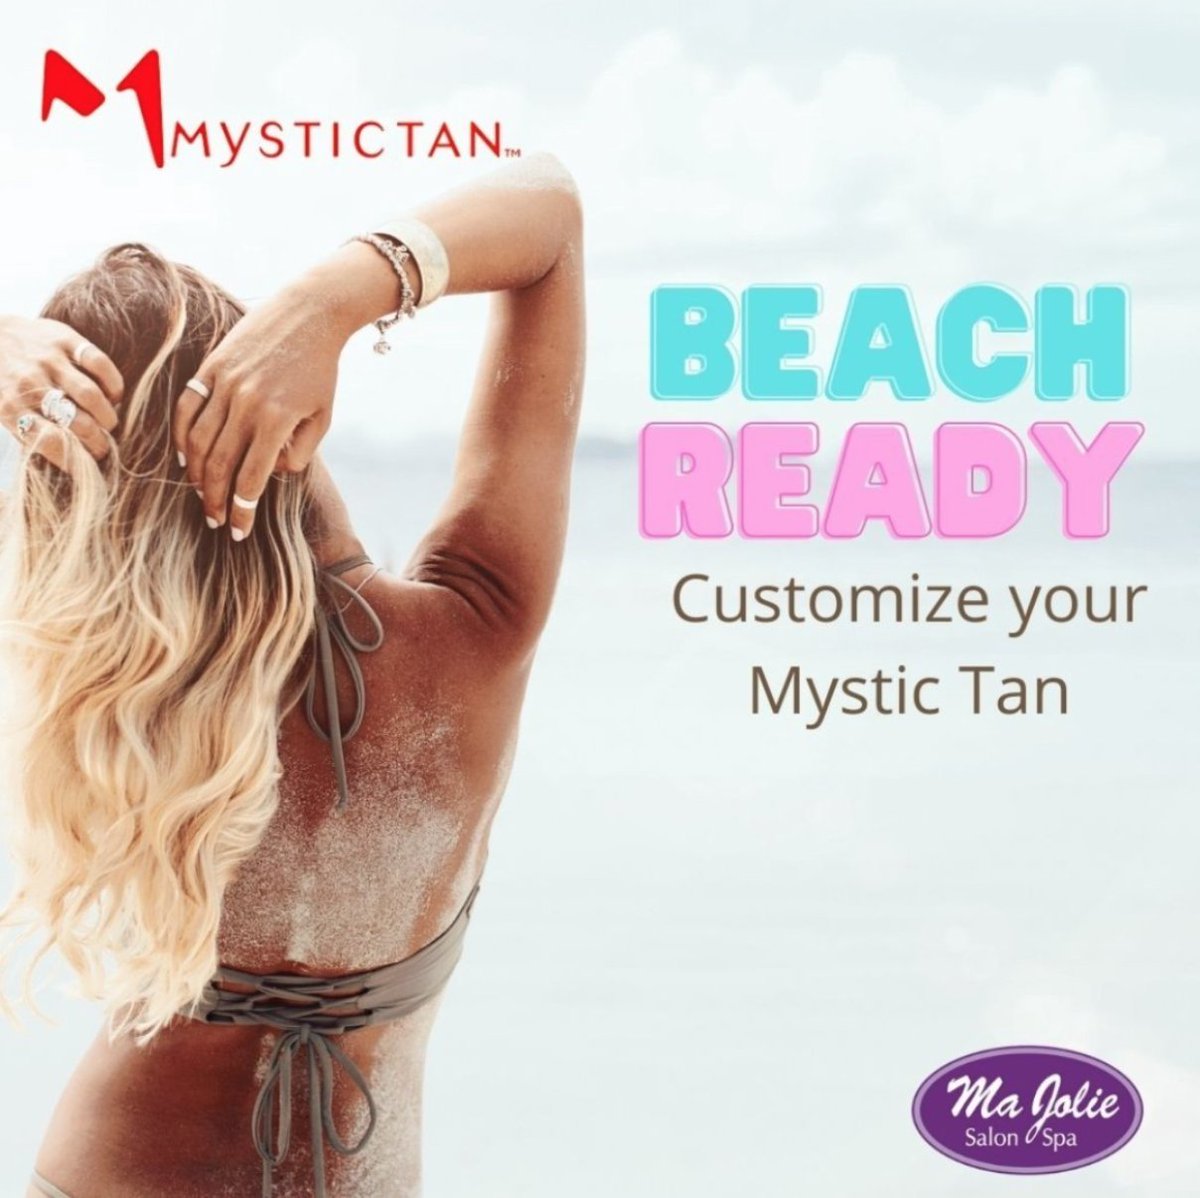 Get Beach Ready with a customizable Mystic Tan. Schedule today at 925-837-2060. Walk-ins welcome
#mystictan #mystictanning #tanning #spraytan #airbrushtan #weekend #sanramonca #danvilleca #walnutcreekca #castrovalleyca #alamoca #pleasantonca